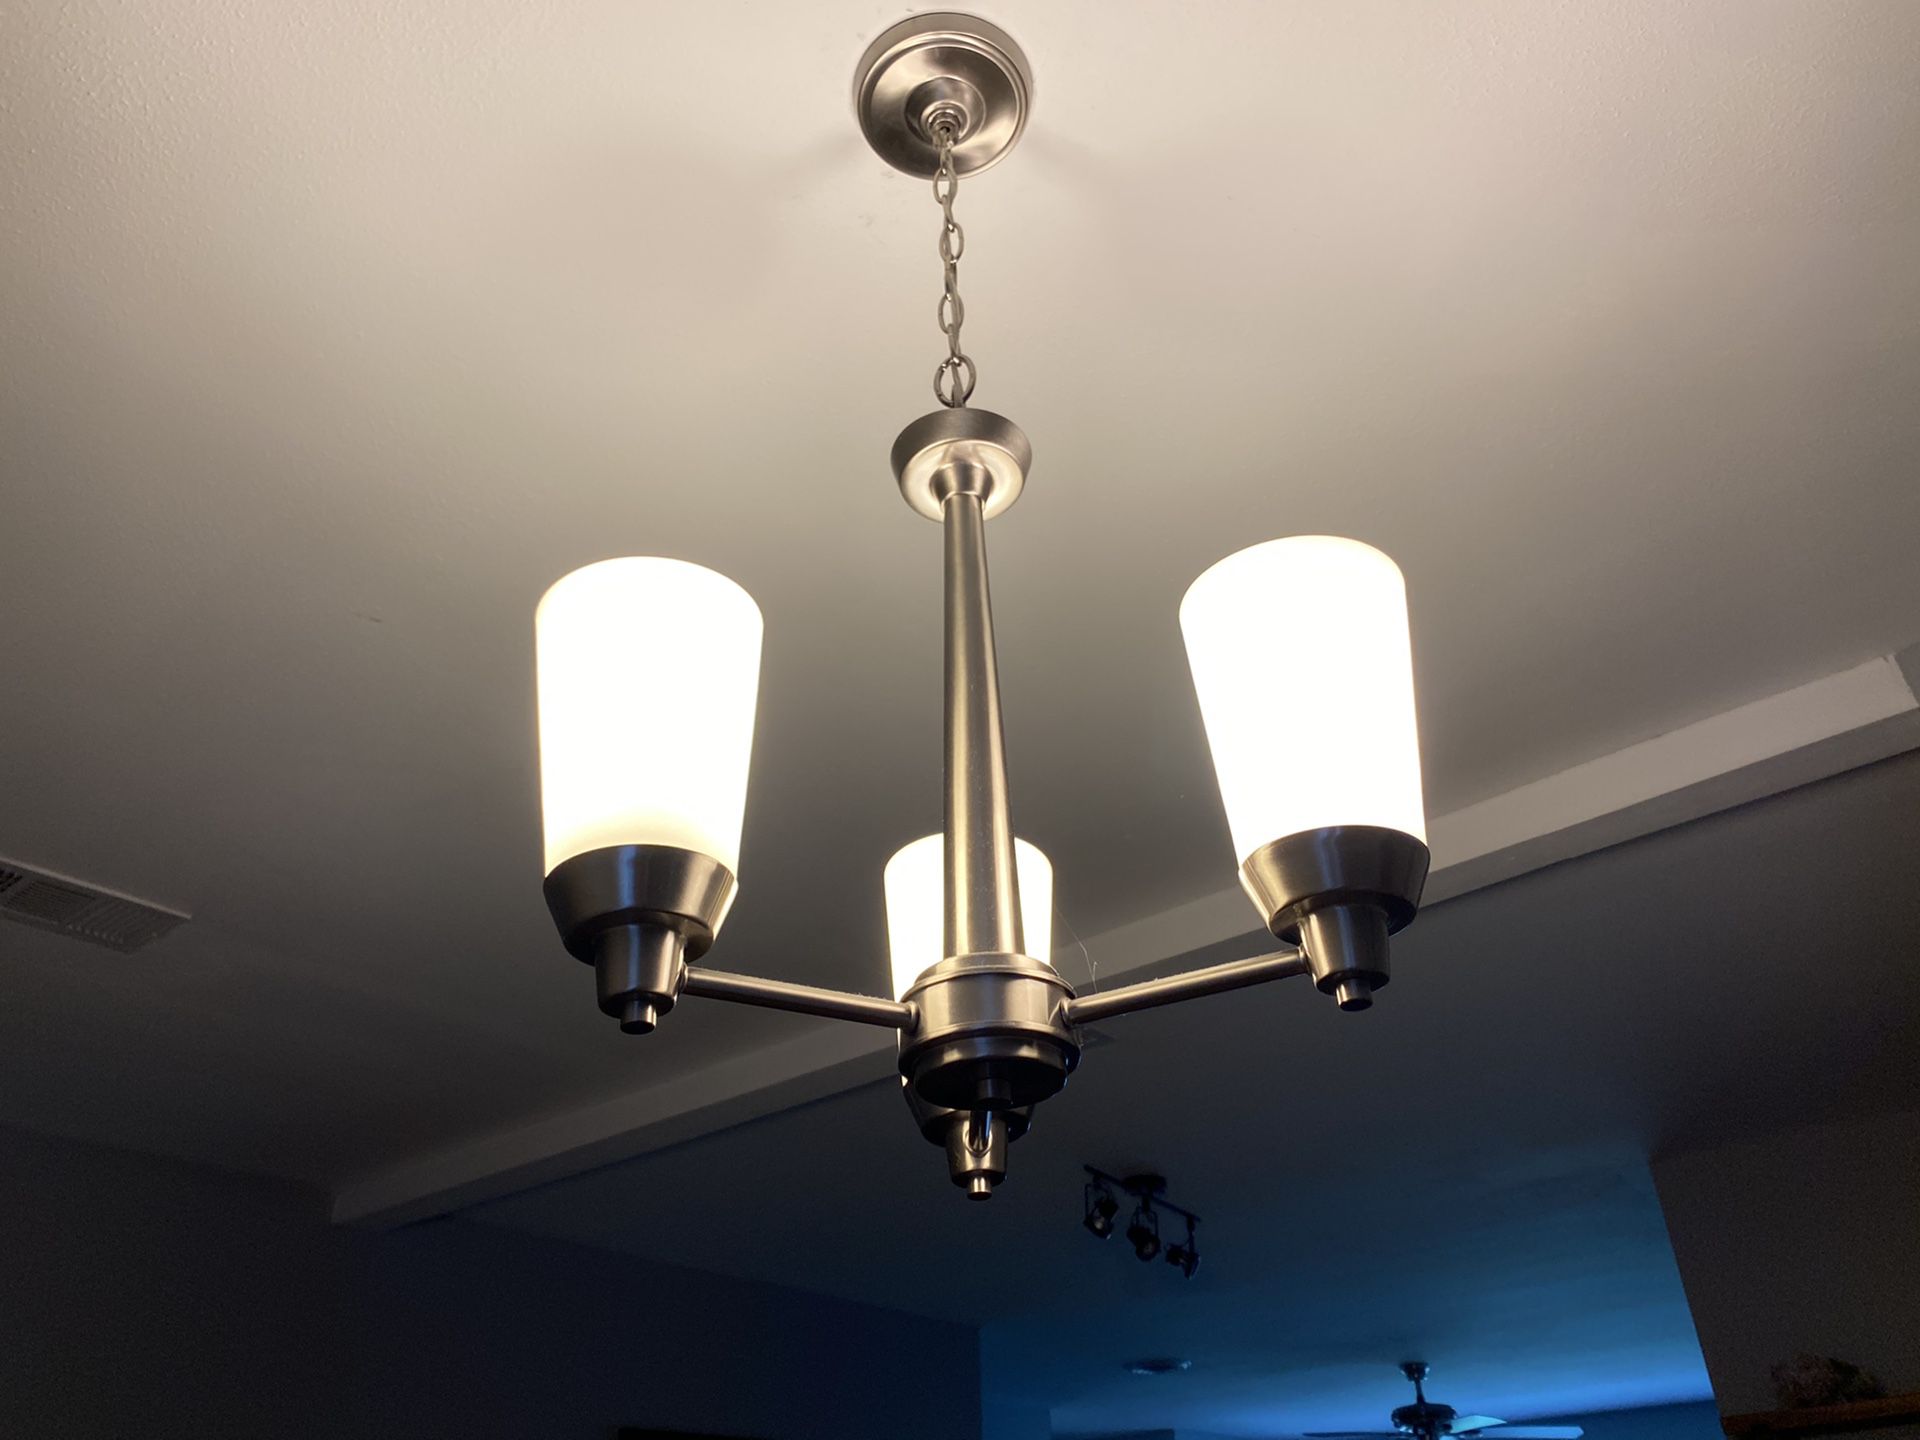 Chandelier, stainless steel, 3 lights (GU10 bulbs)